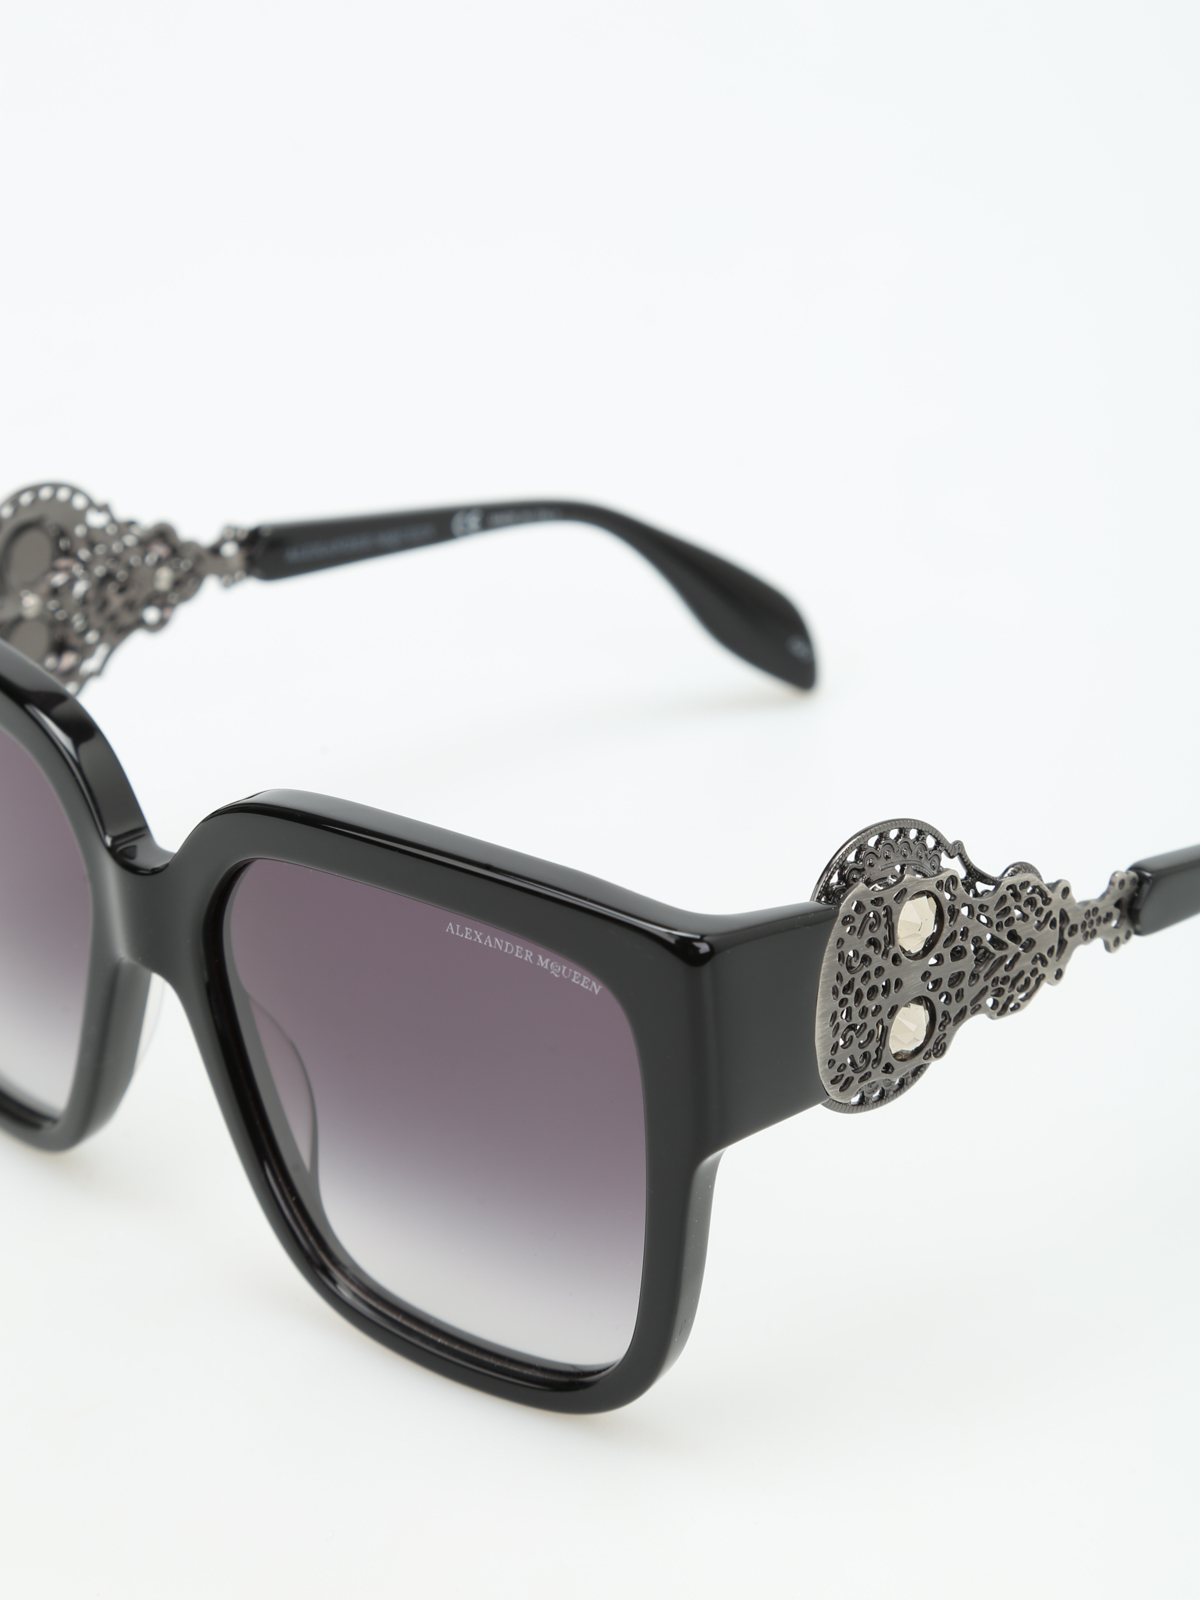 Sunglasses Alexander Mcqueen - Skull detail sunglasses - AM0060S001